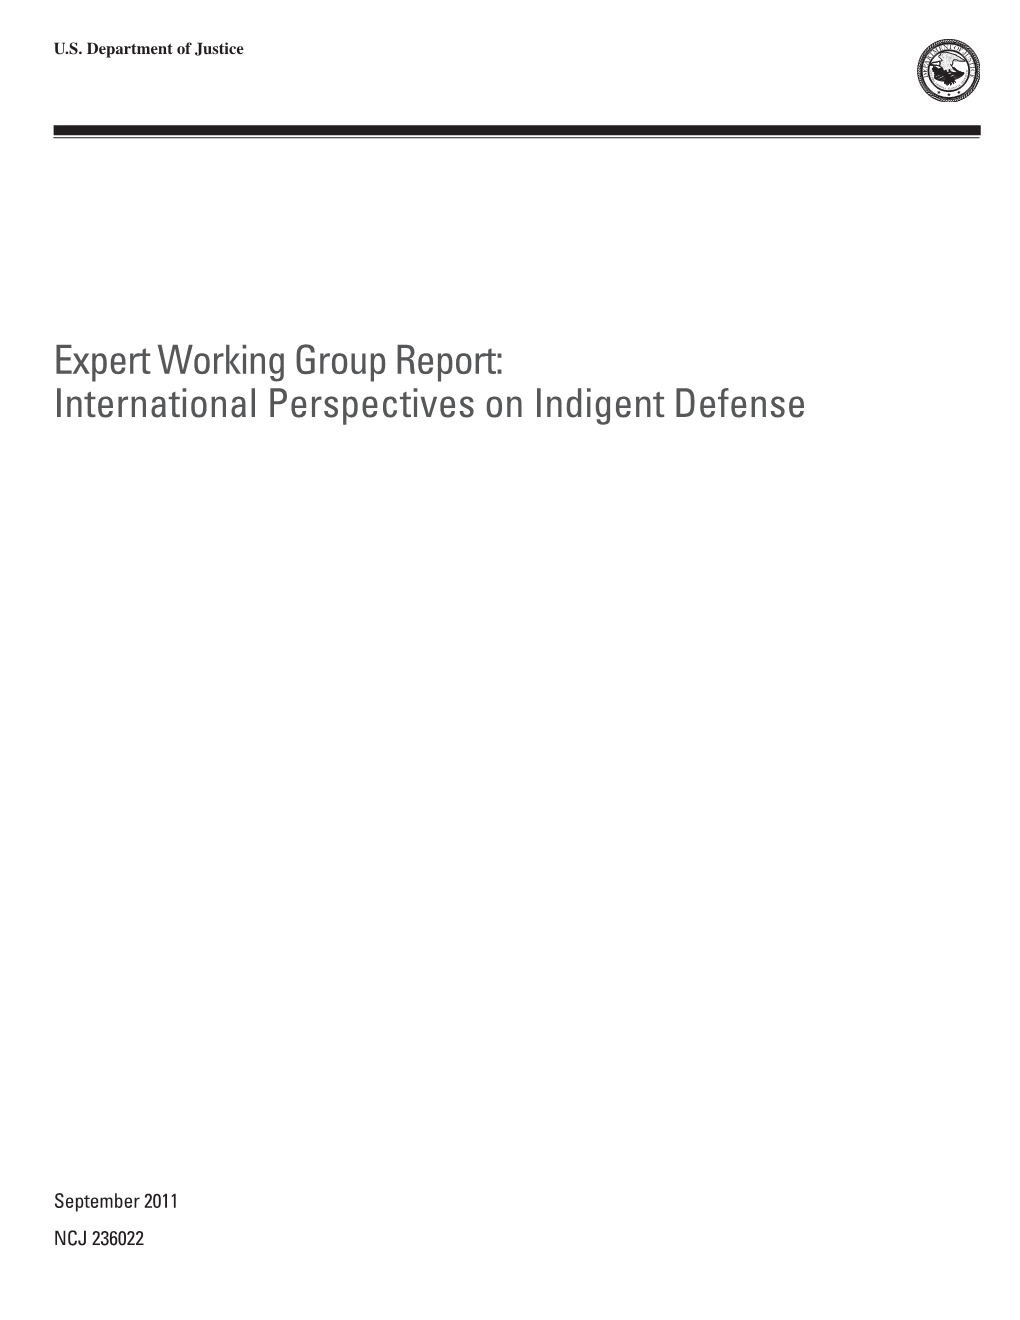 Expert Working Group Report: International Perspectives on Indigent Defense